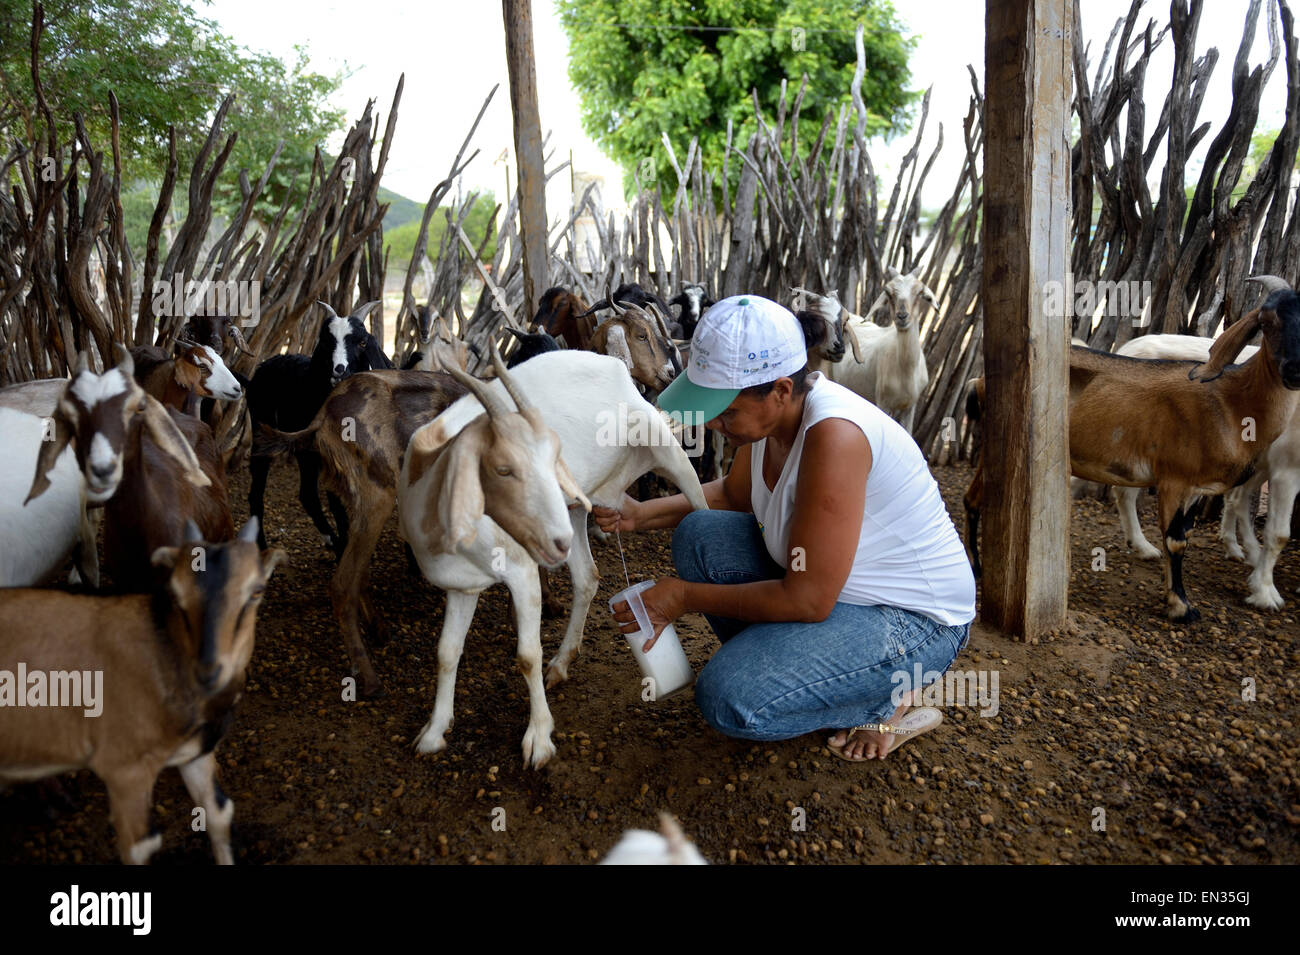 Femme la traite d'une Chèvre (Capra aegagrus hircus), Caladinho, Uaua, Bahia, Brésil Banque D'Images